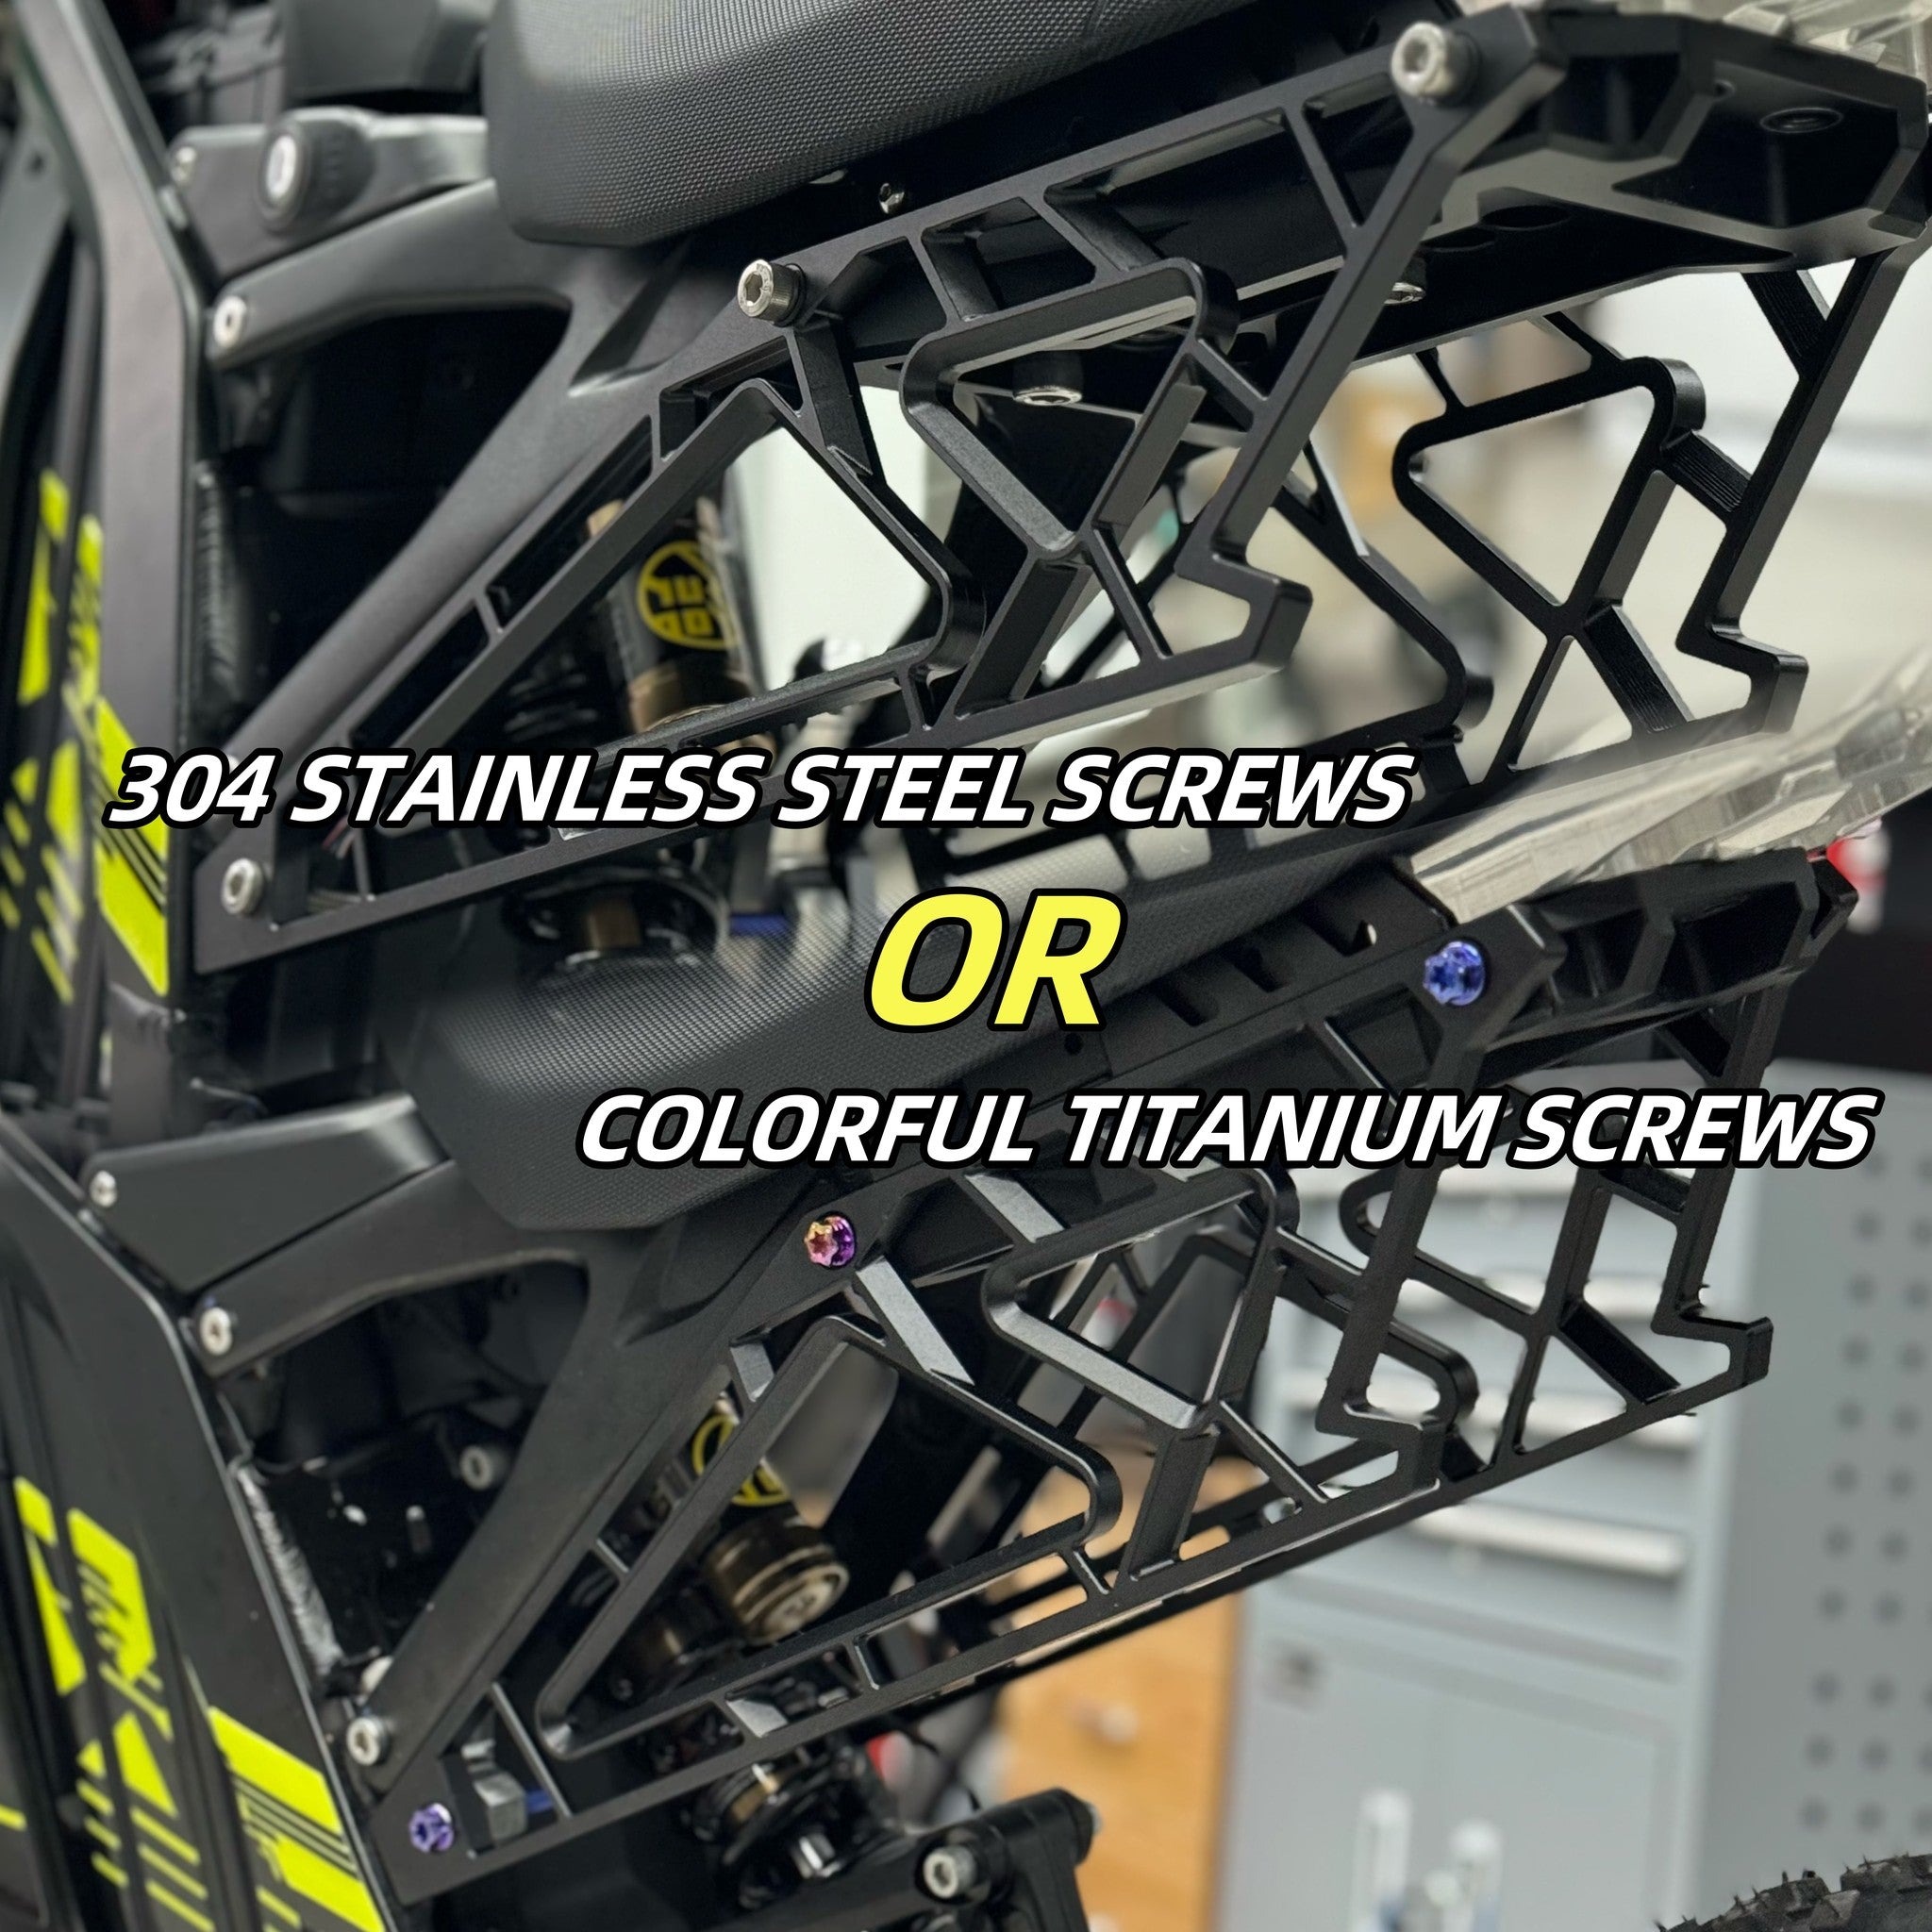 Stainless Or Titanium?